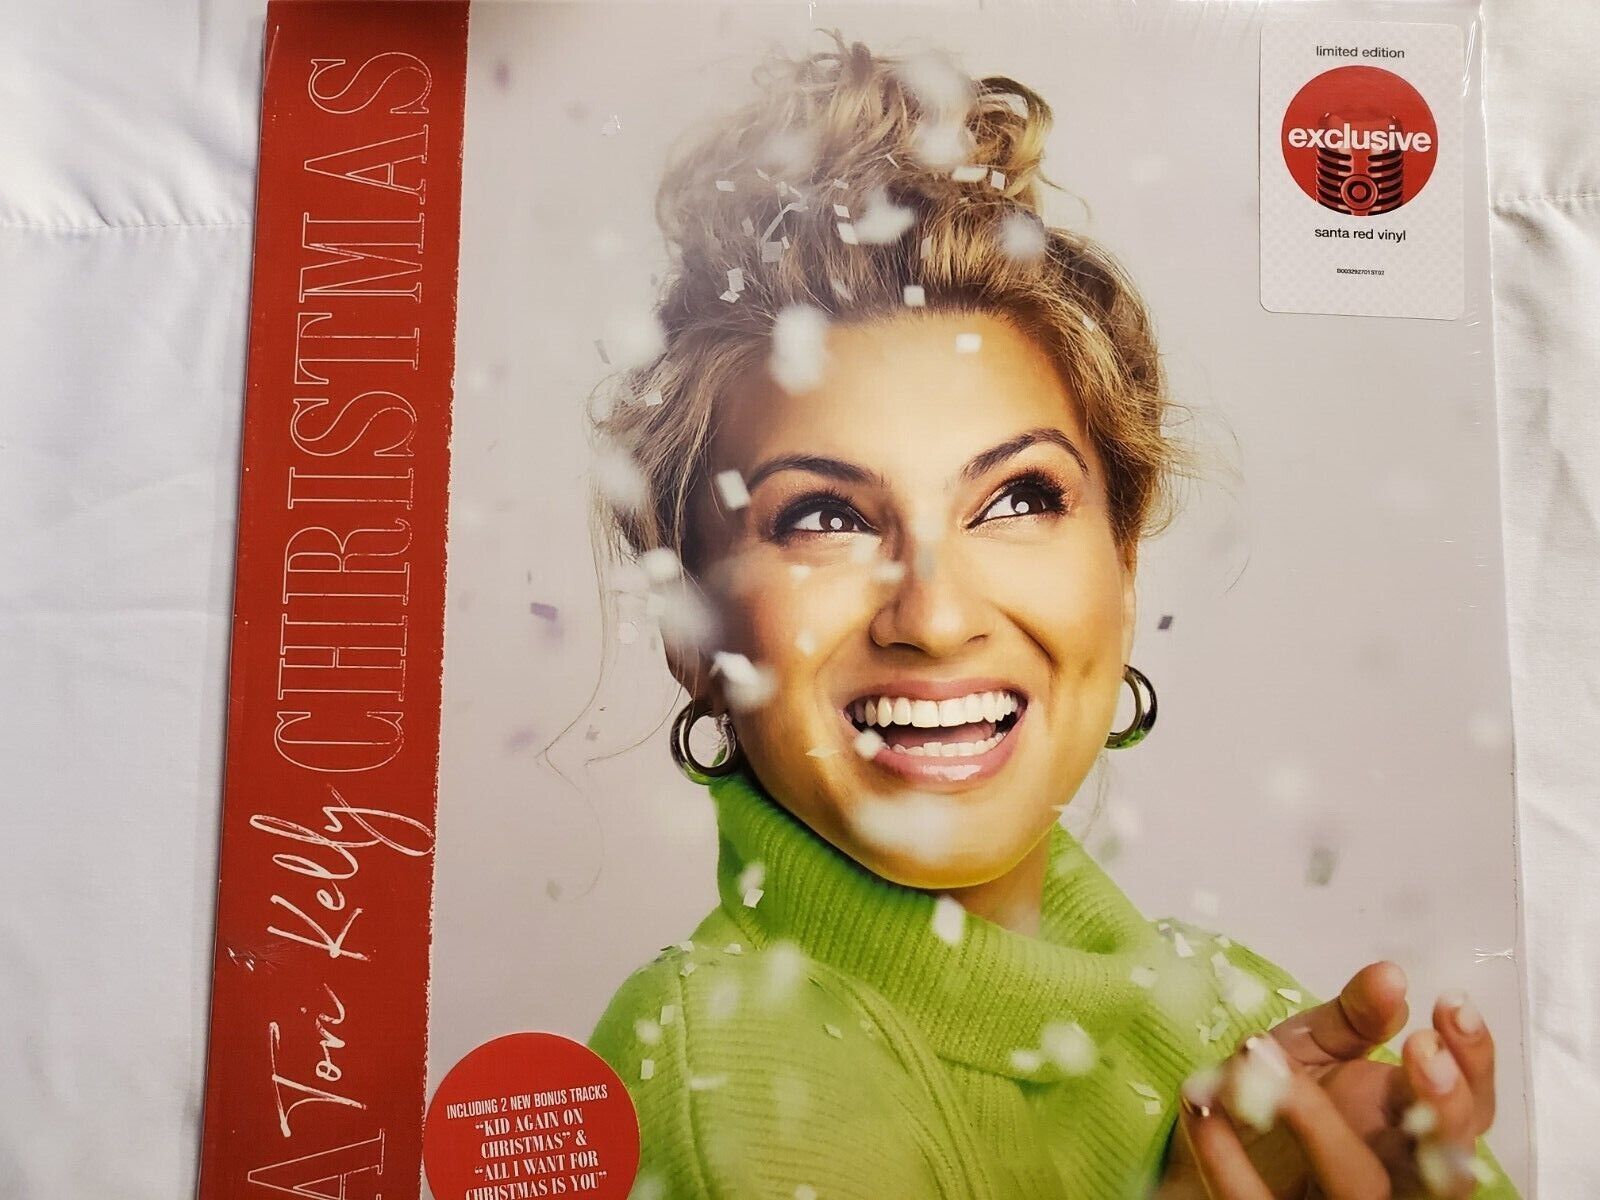 A Tori Kelly Christmas Limited Edition Santa Red Vinyl LP - 2 Bonus Tracks